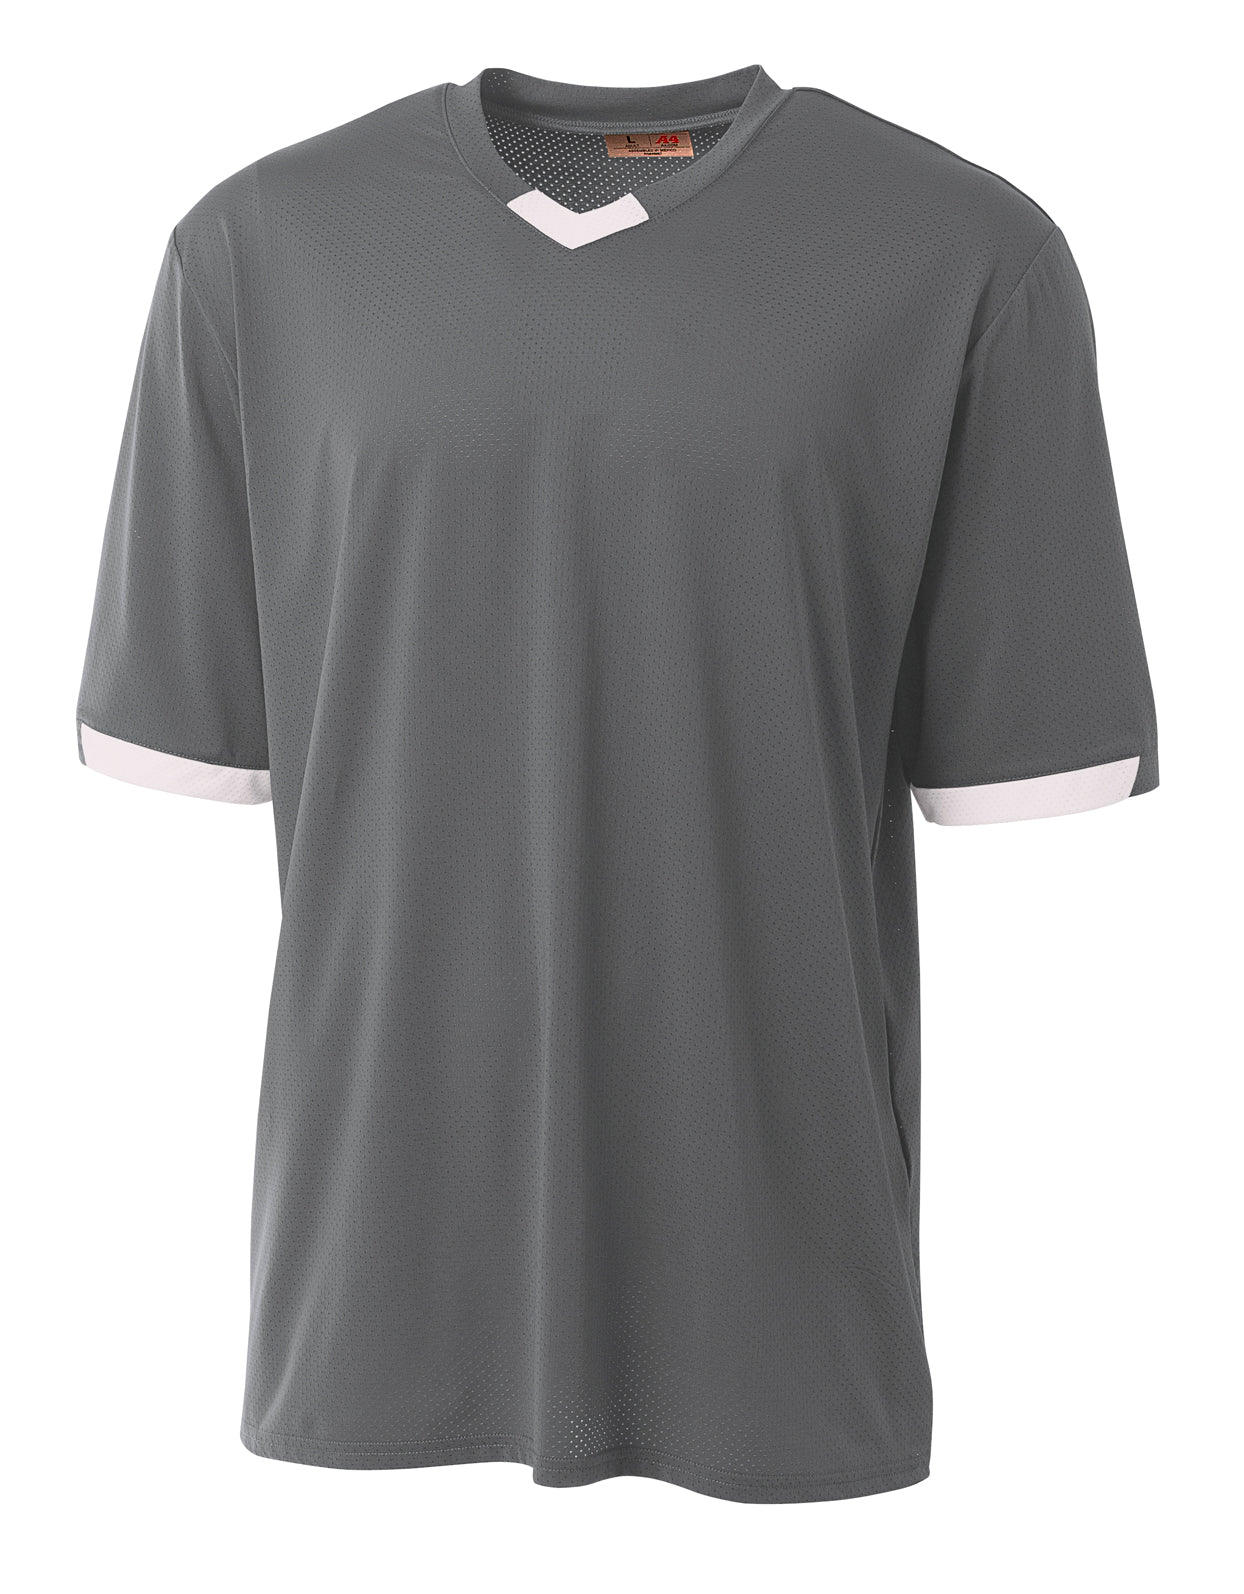 Graphite/white A4 A4  Stretch Pro Baseball Jersey